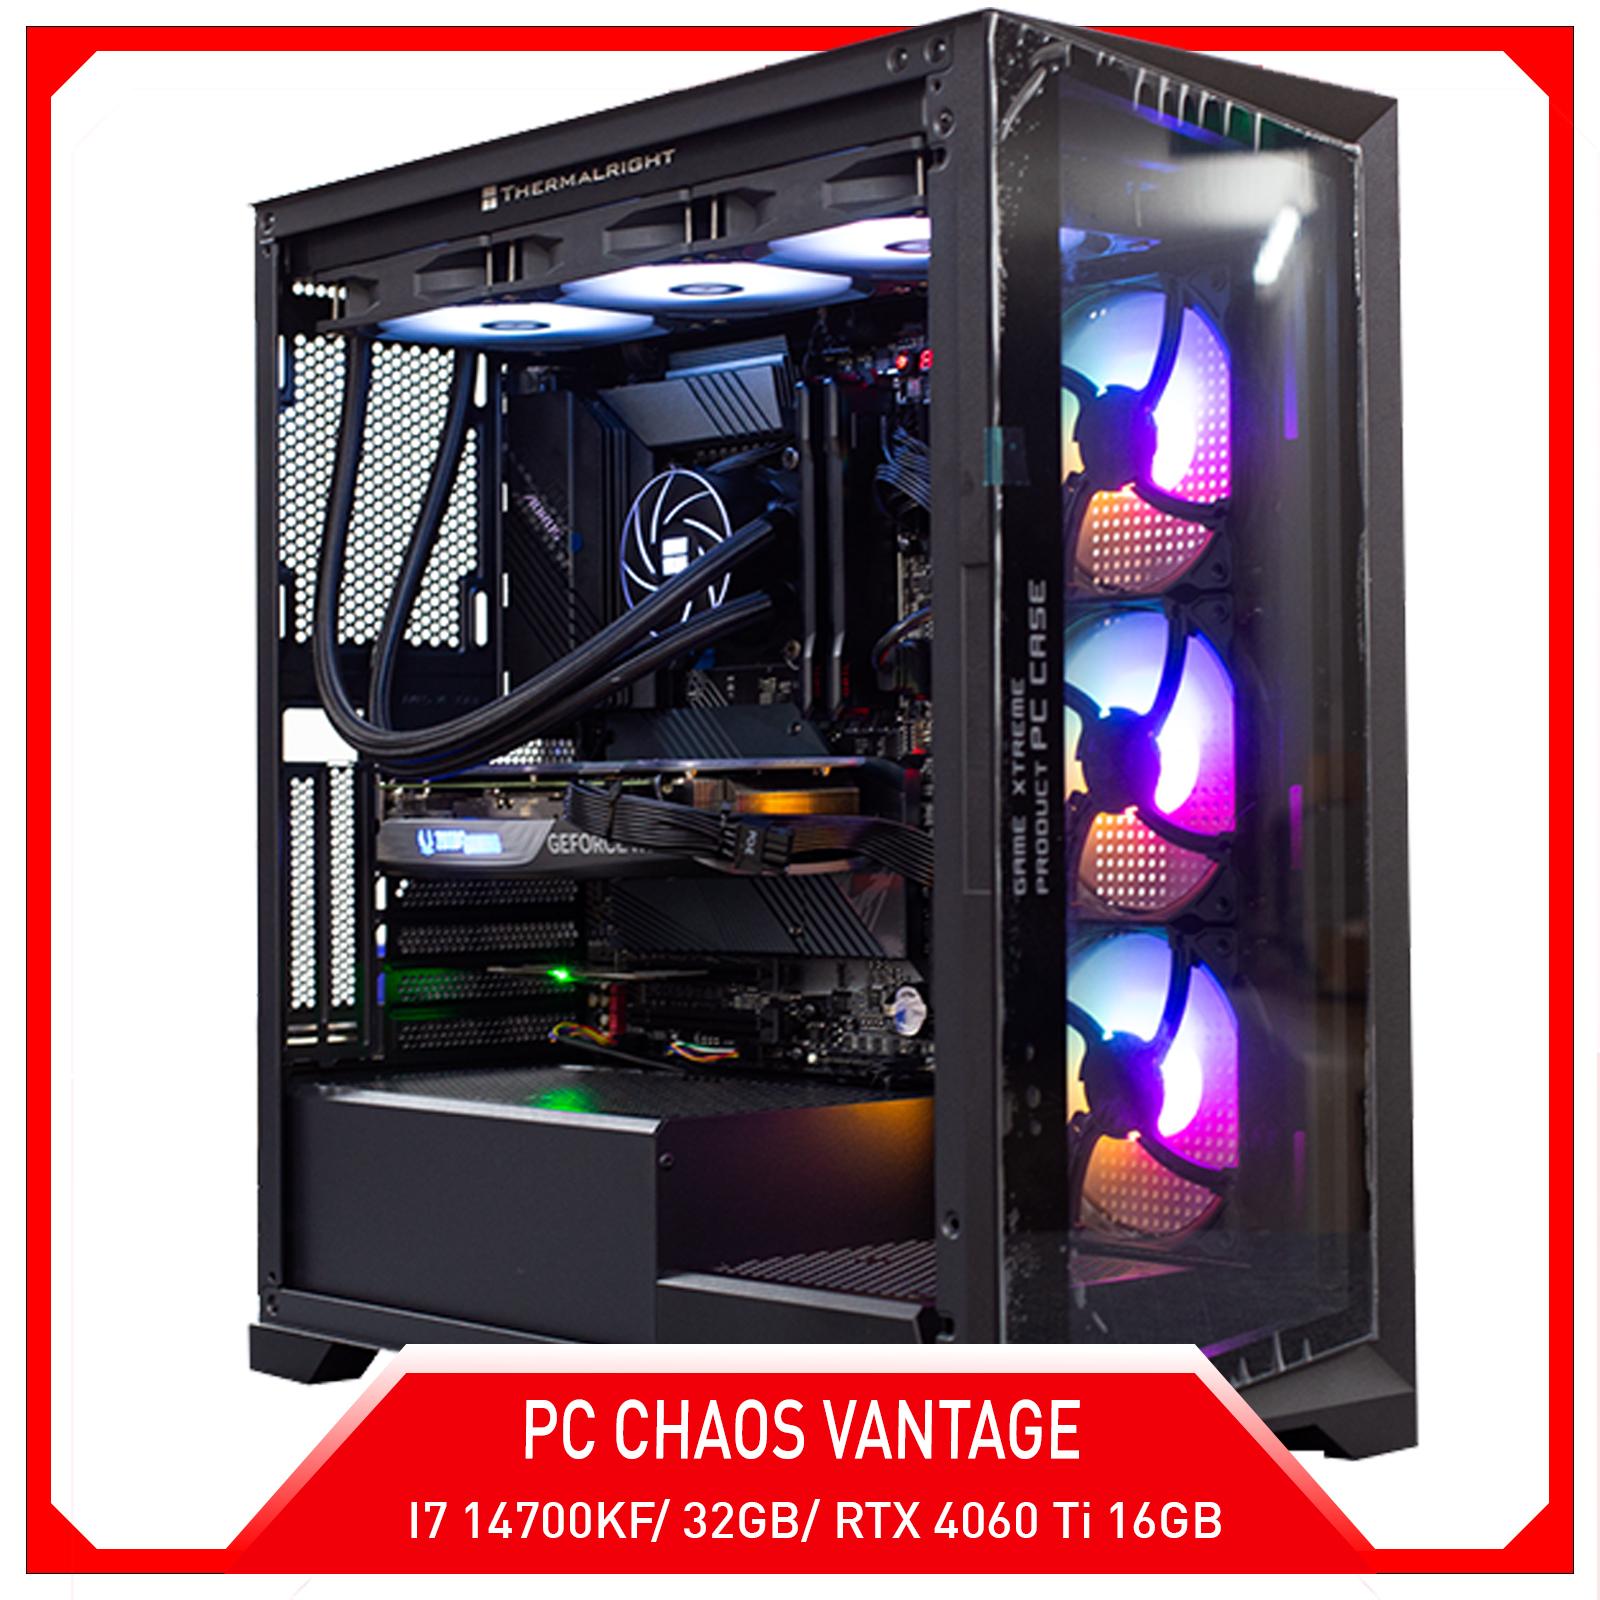 PC Chaos Vantage I7 14700KF/ 32GB/ RTX 4060 Ti 16GB